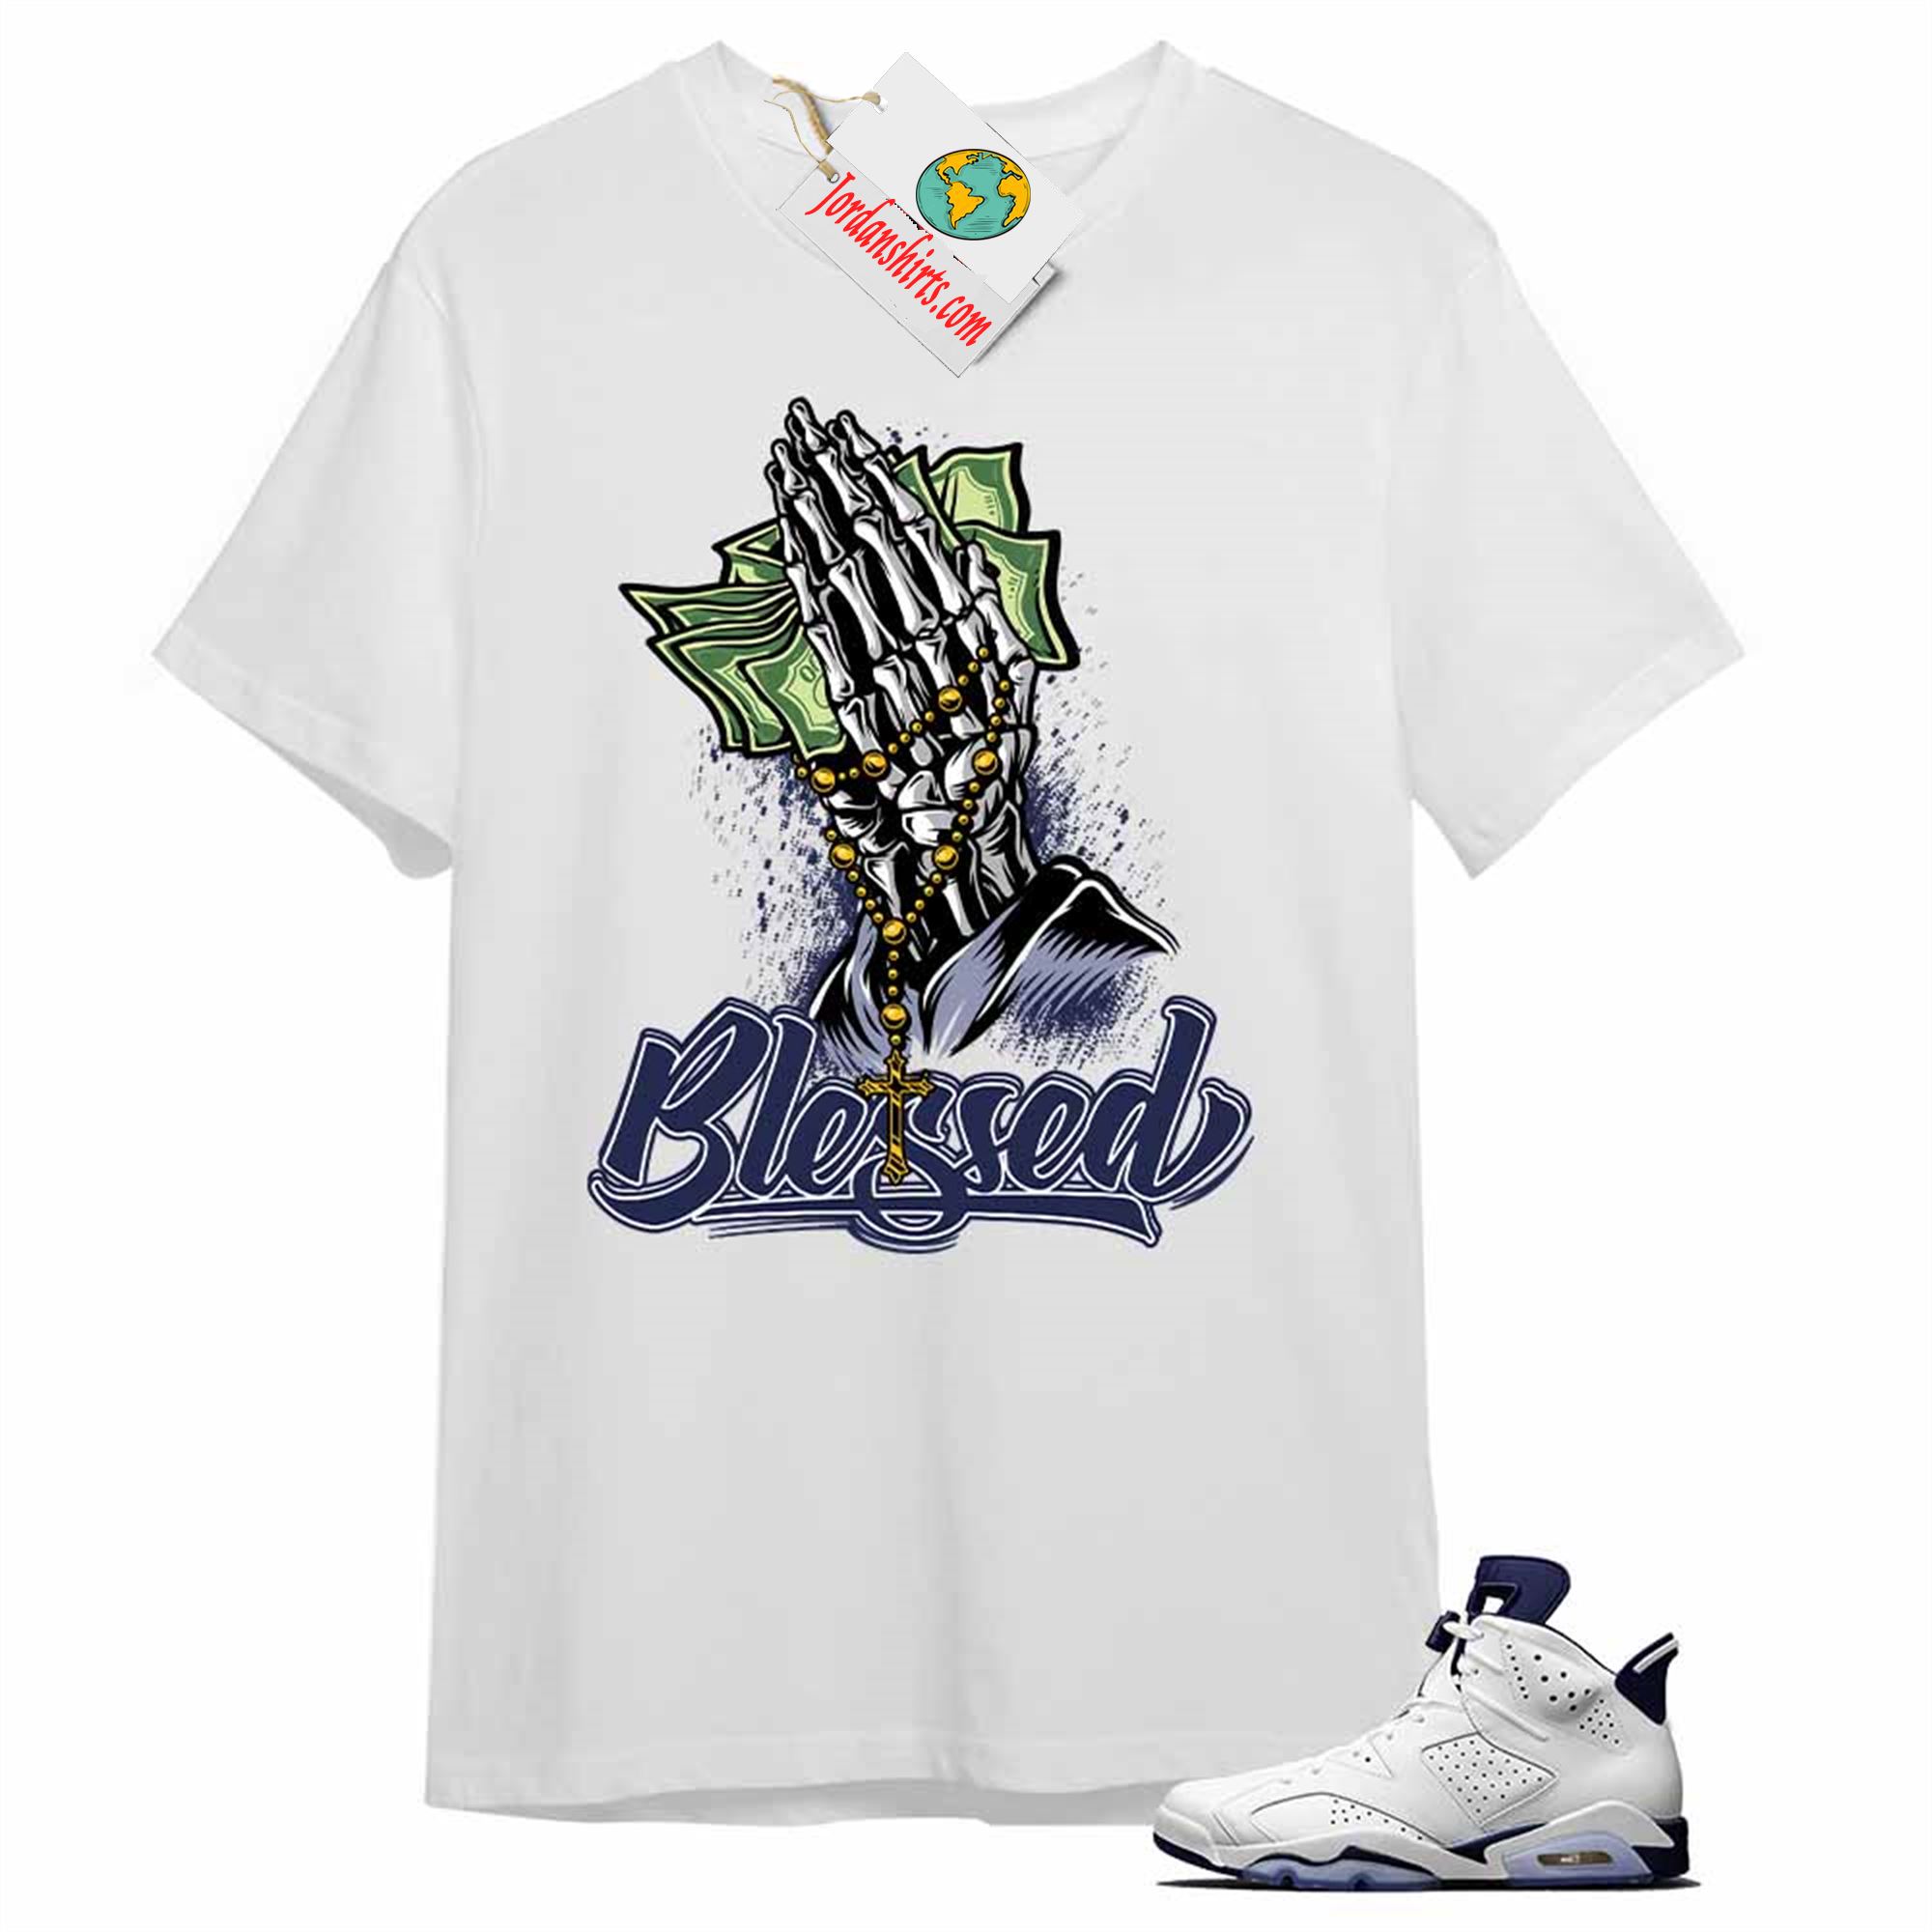 Jordan 6 Shirt, Blessed Pray Hand Money White Air Jordan 6 Midnight Navy 6s Plus Size Up To 5xl